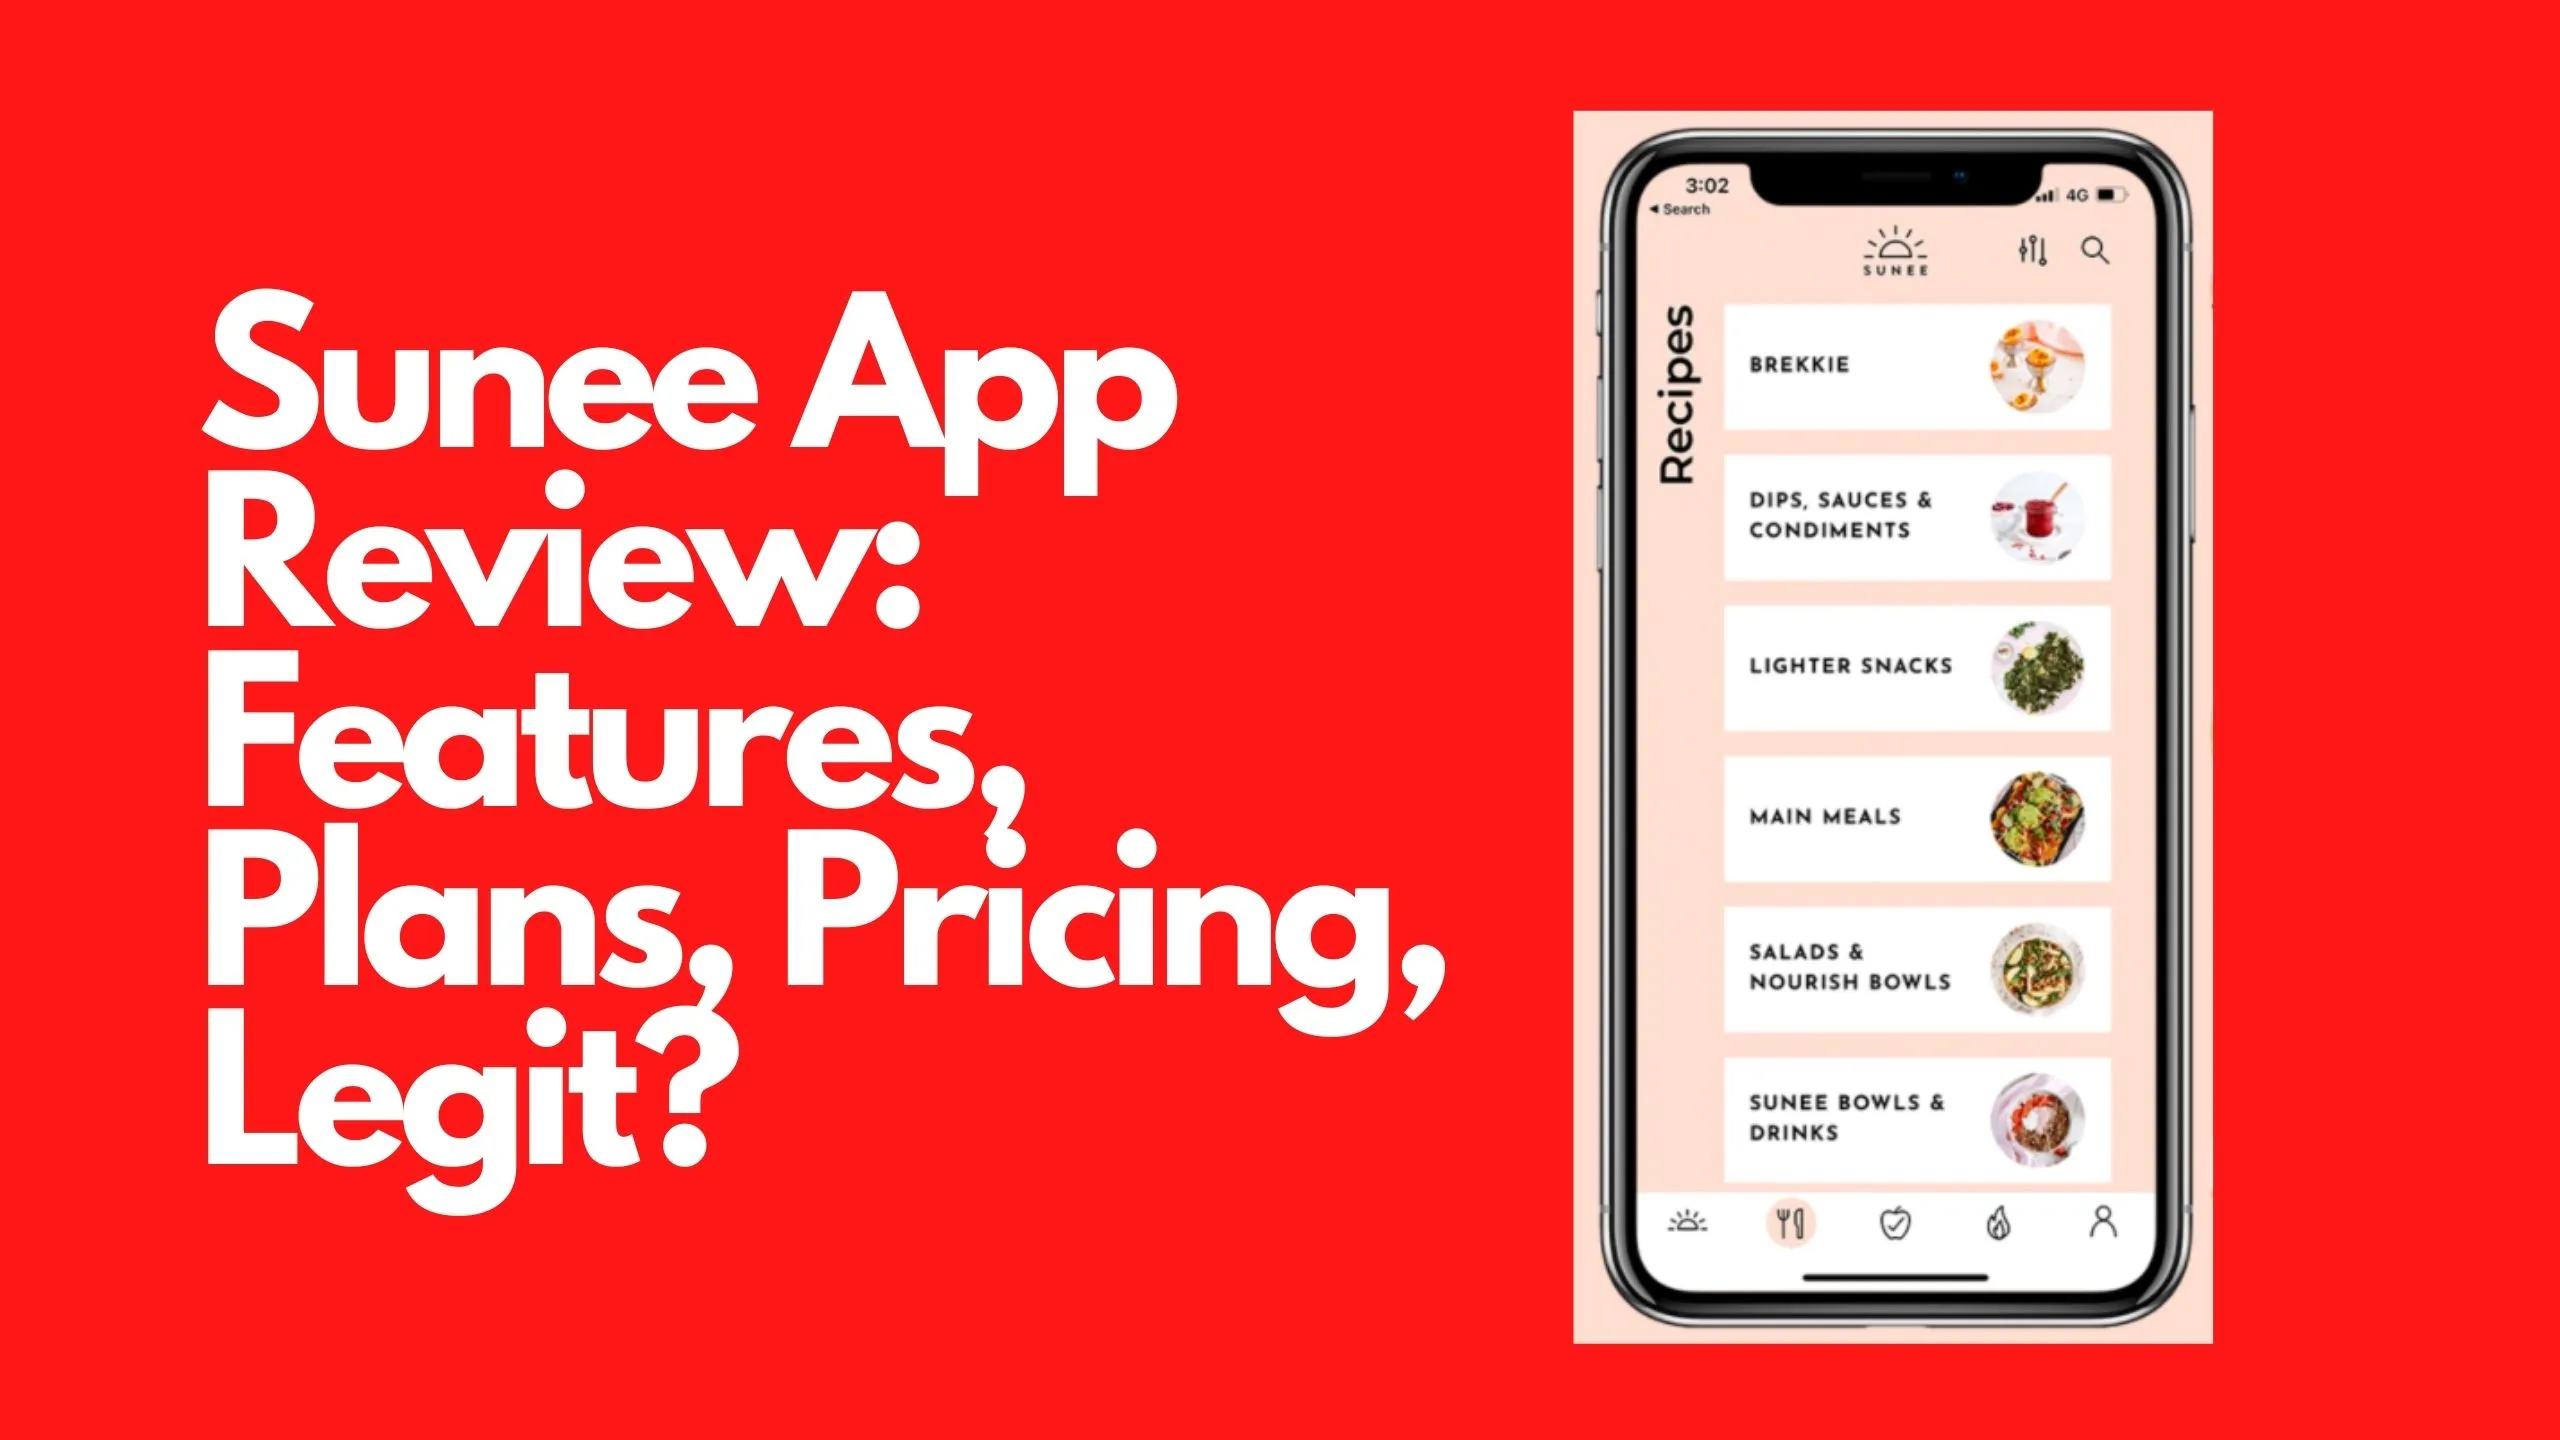 Sunee App Review: Features, Plans, Pricing, Legit?